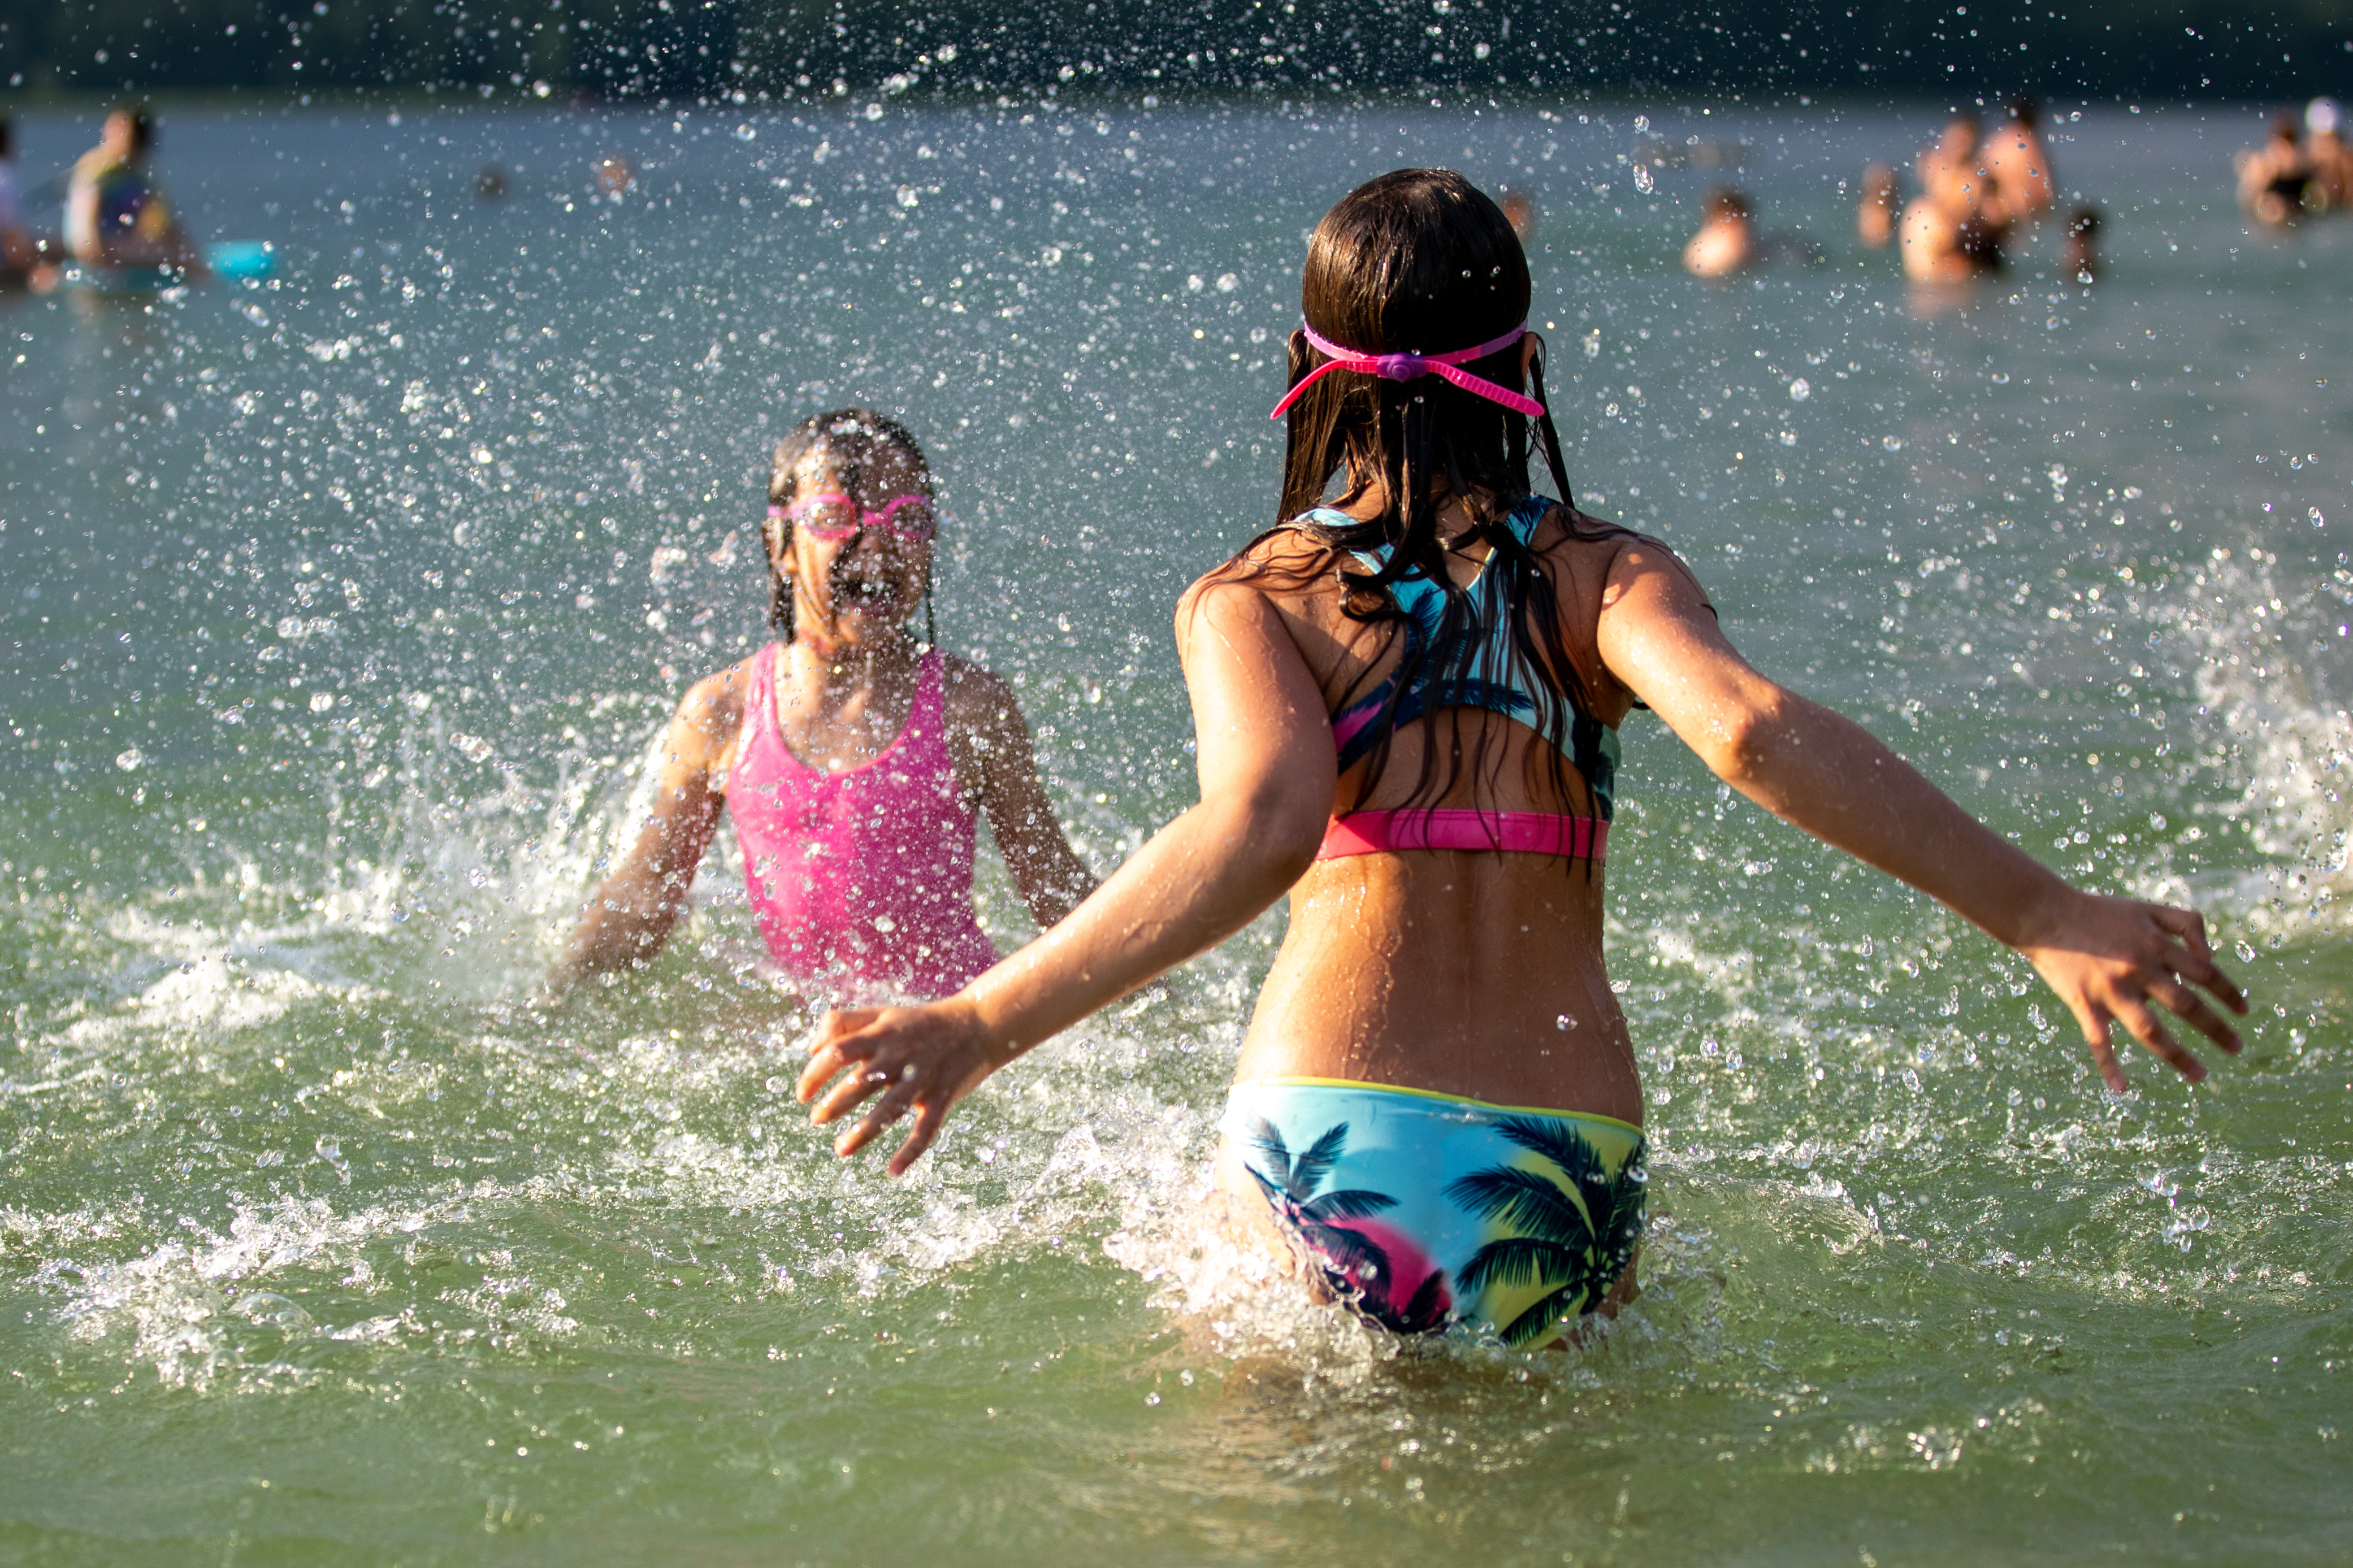 Children splash and play in water